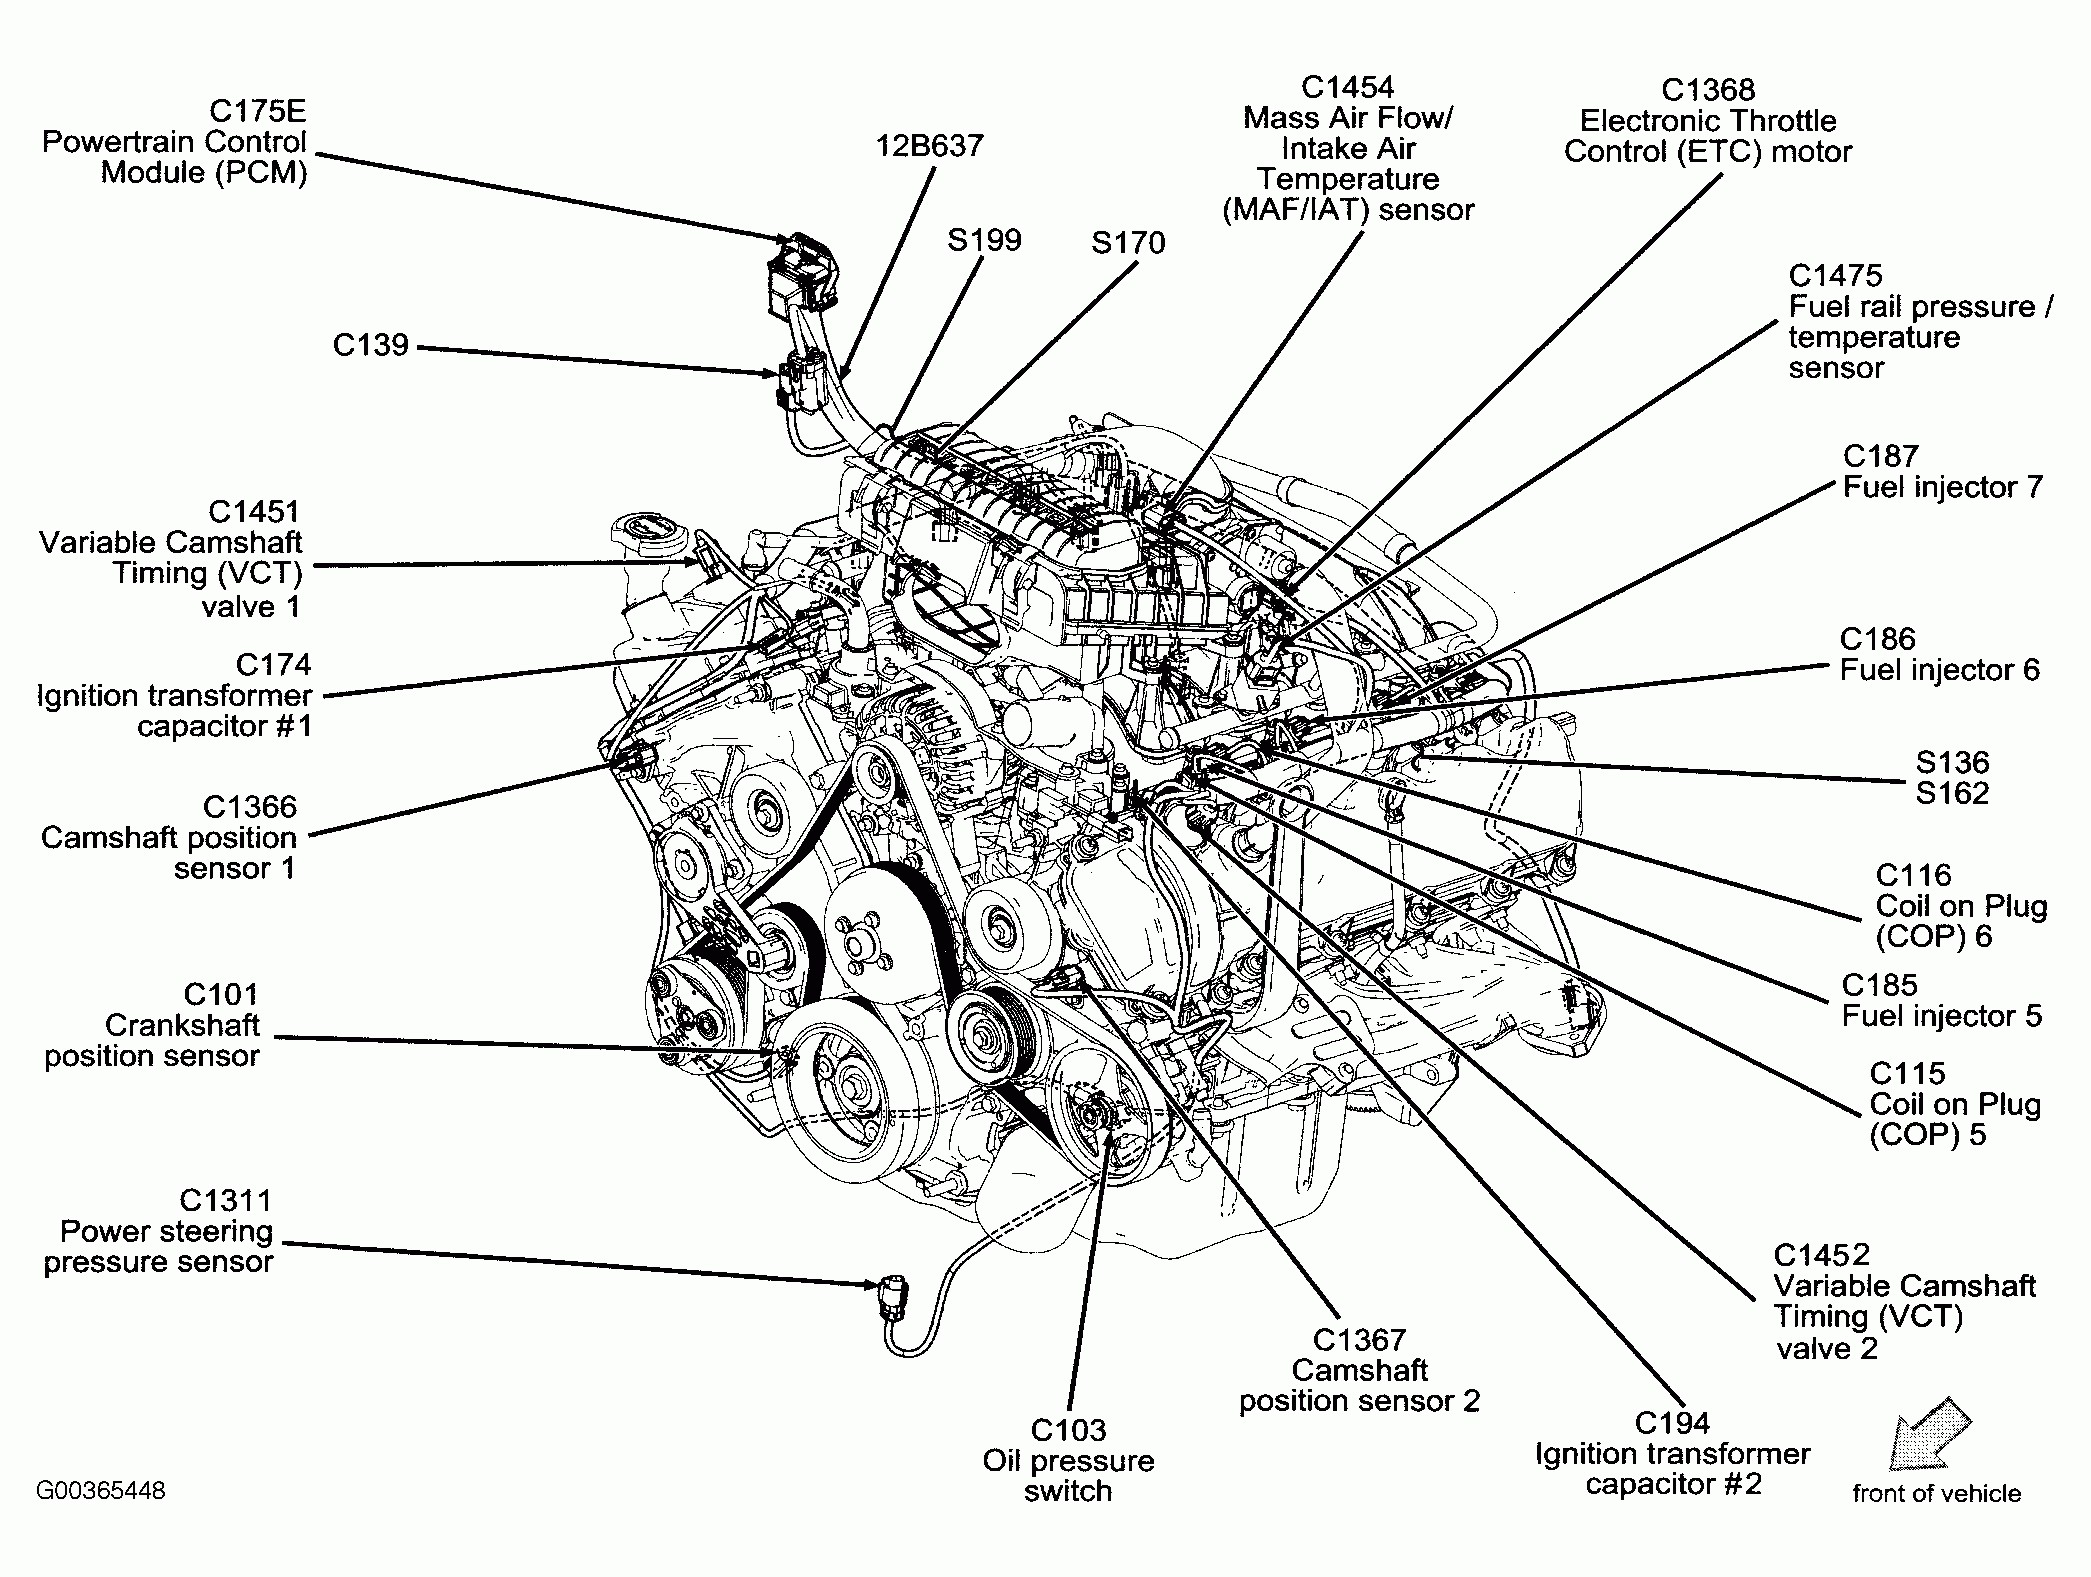 2004 ford Escape Engine Diagram 2005 ford Escape Xlt 3 0 Engine Diagrams Find Wiring Diagram •